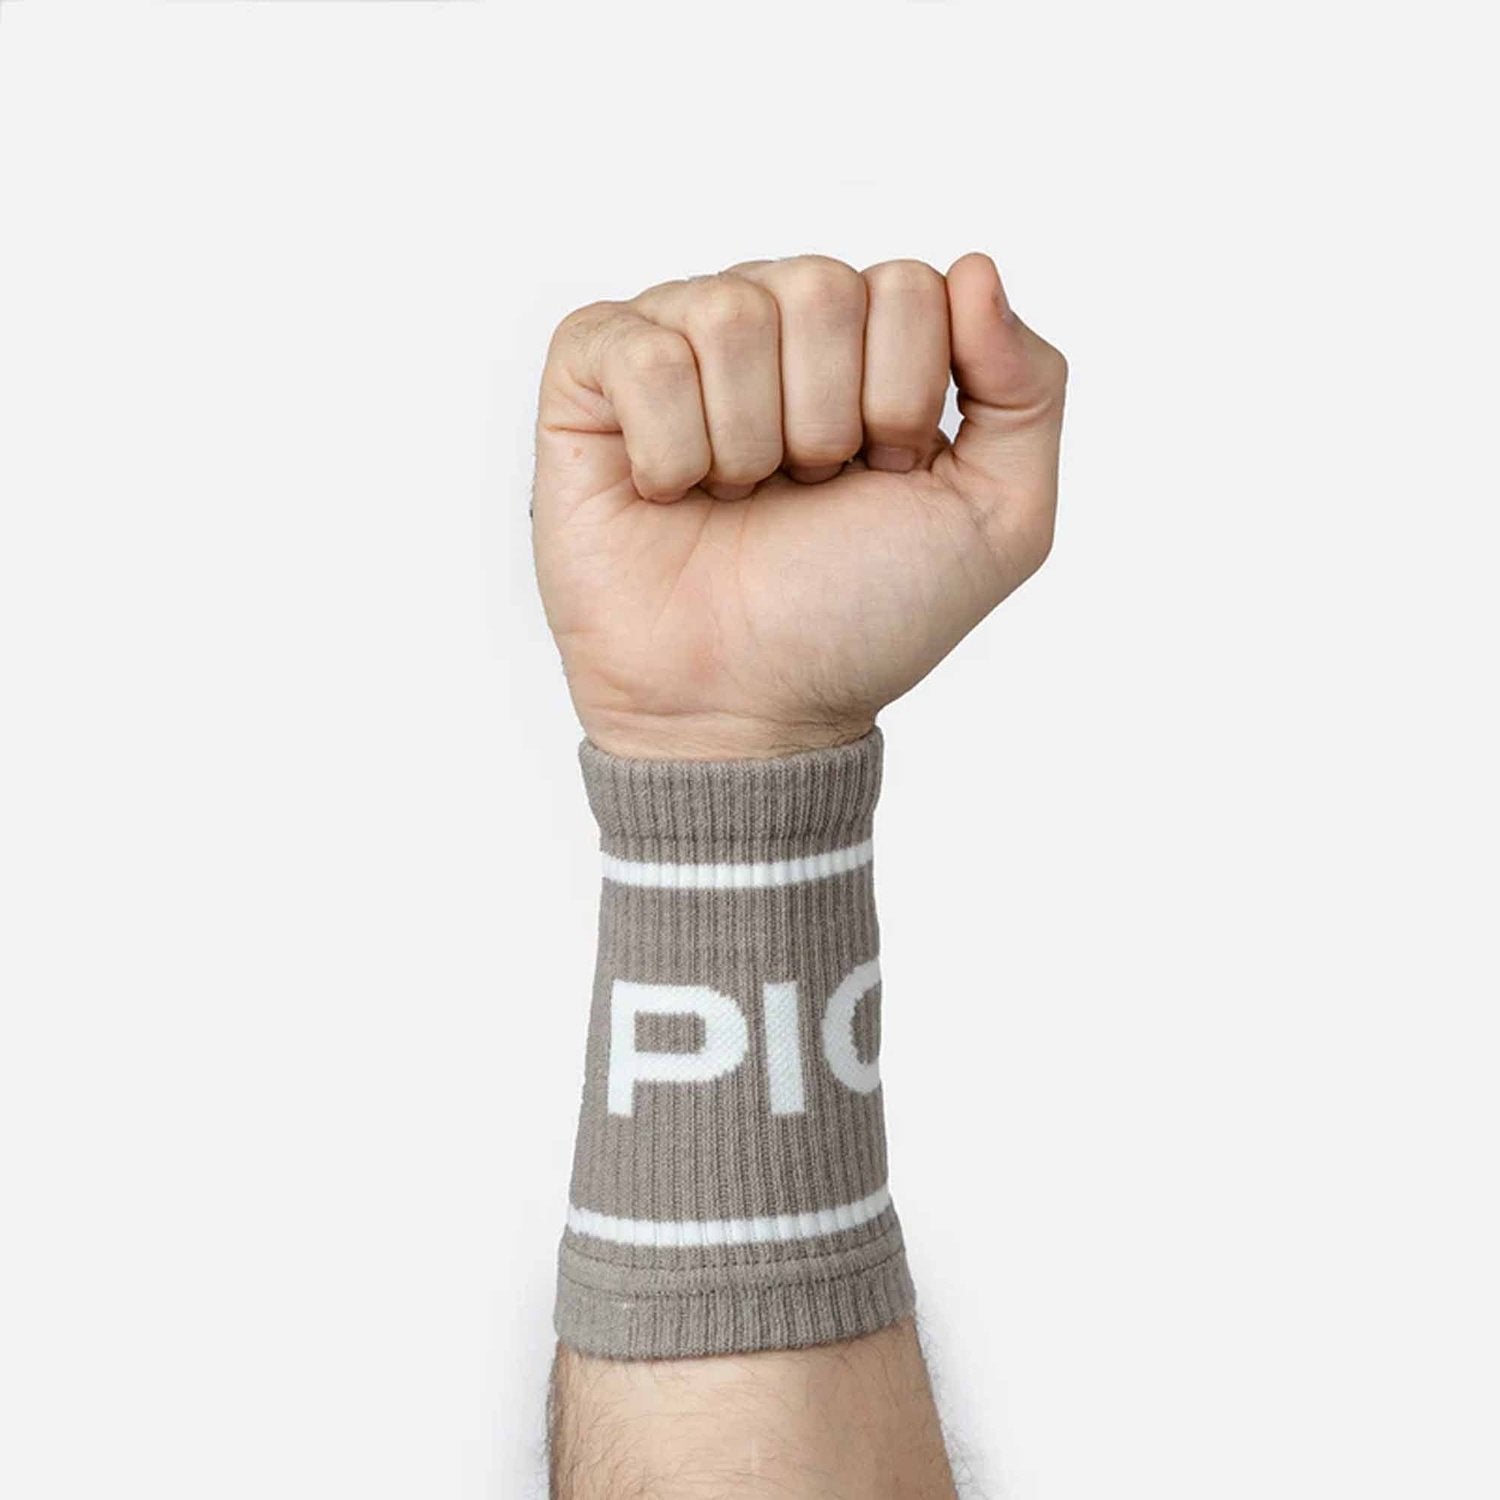 PicSil Wrist Bands (Schweissbänder) Taupe kaufen bei HighPowered.ch